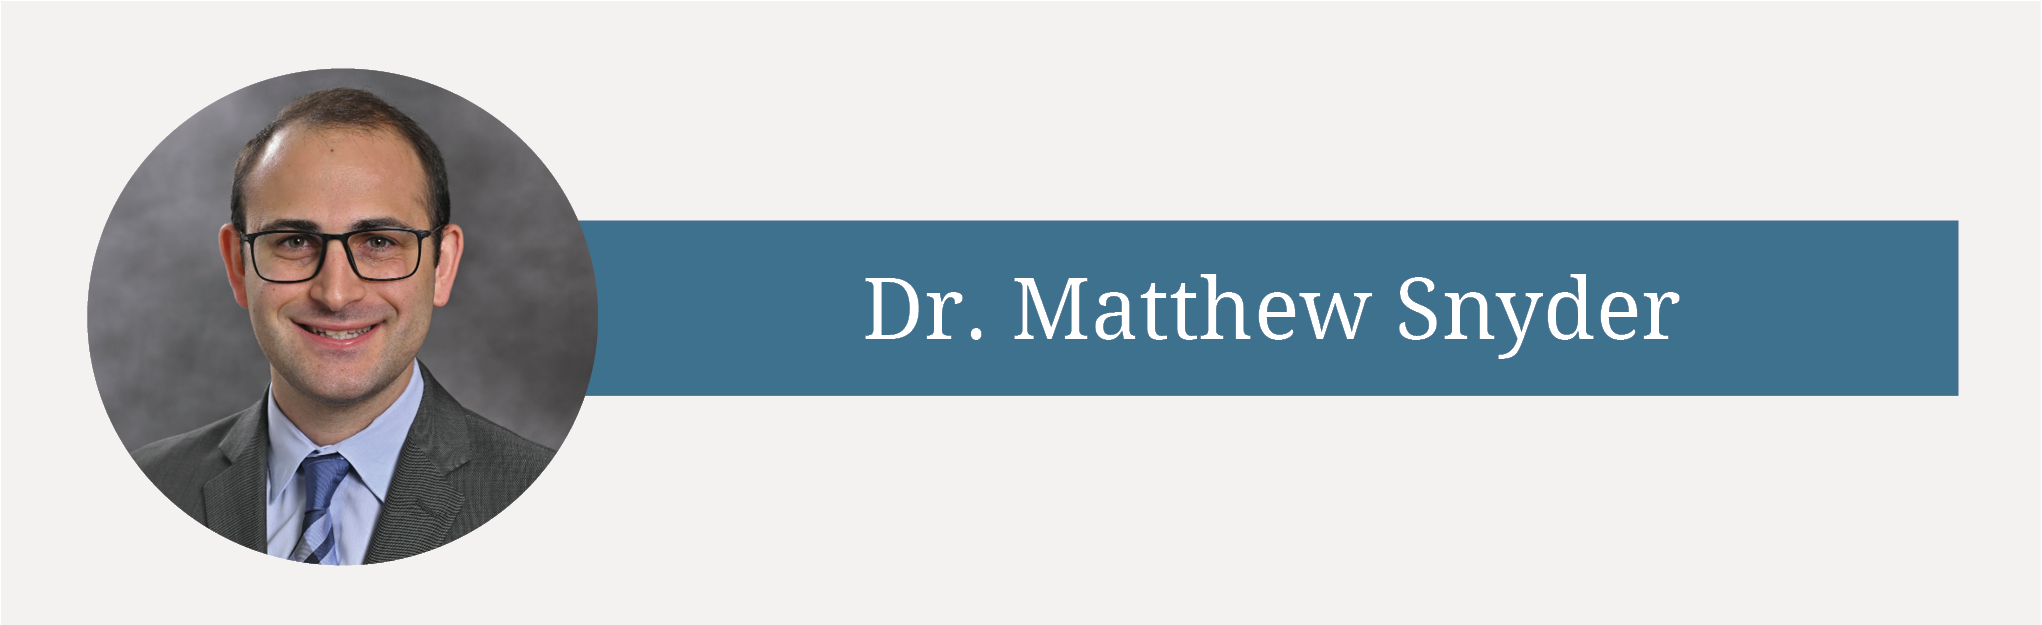 Rheumatologist Dr. Matthew Snyder Joins Scarsdale Medical Group